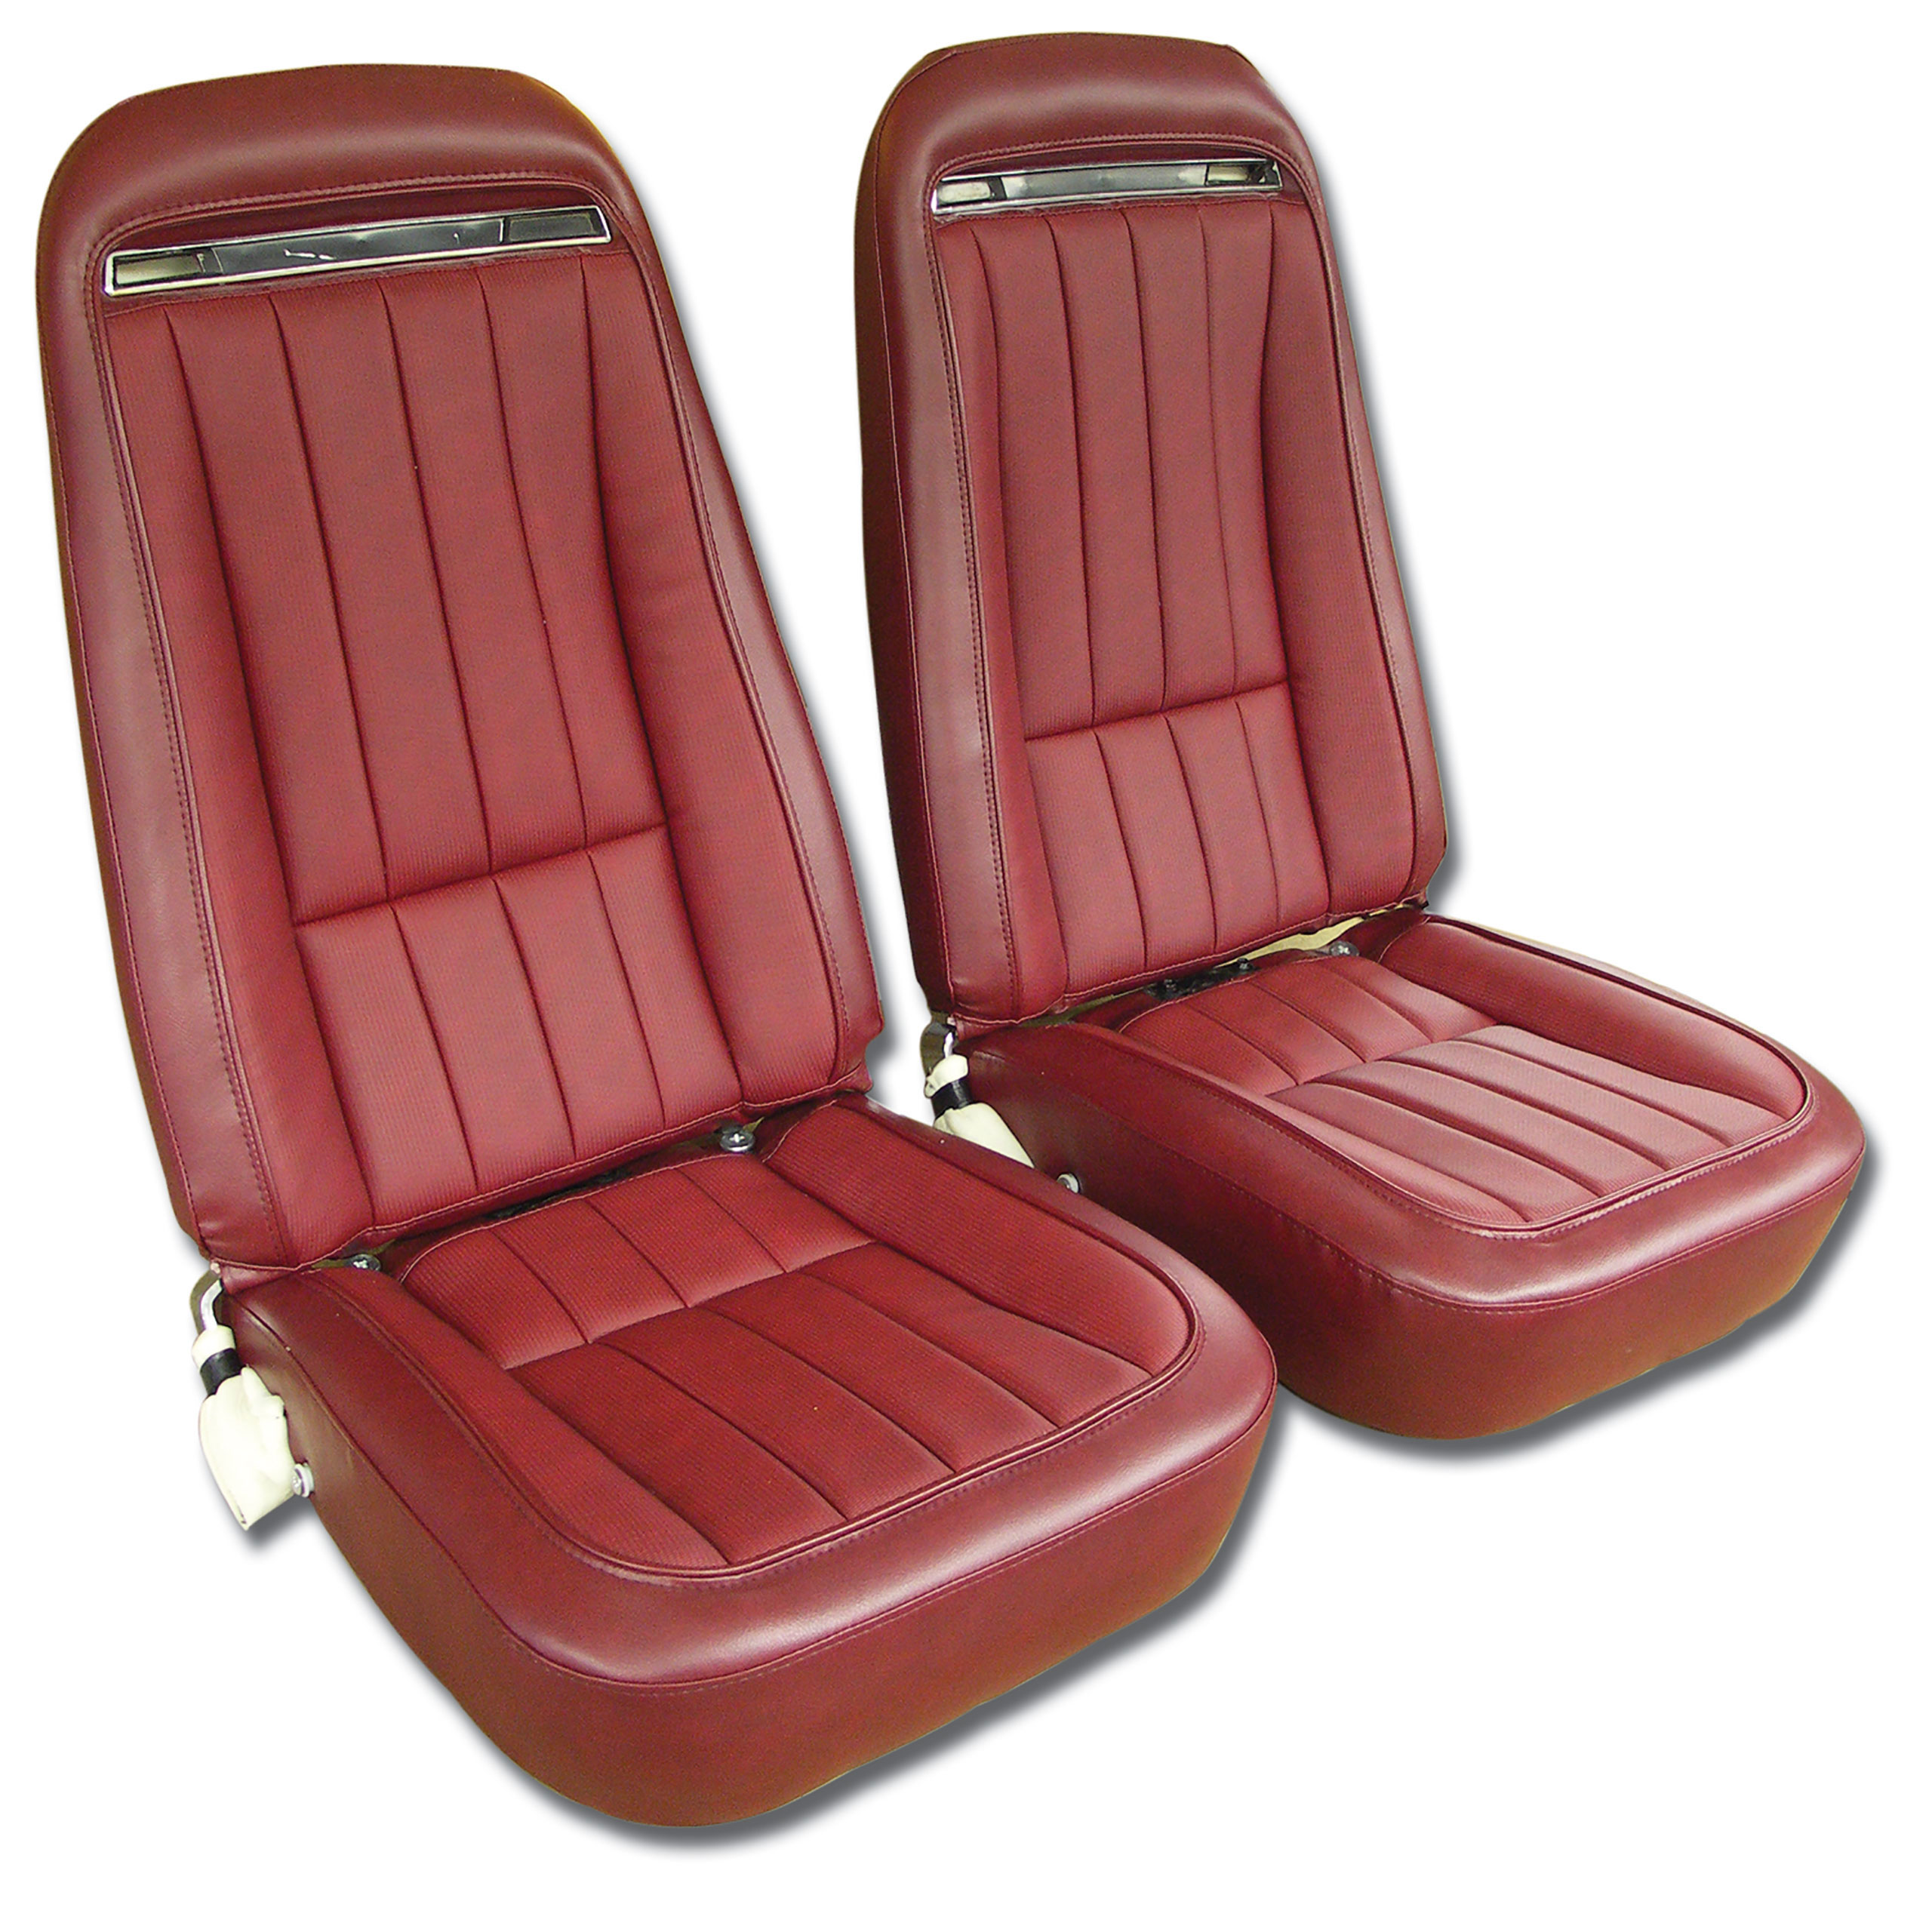 1975 Corvette C3 "Leather-Like" Vinyl Seat Covers- Oxblood CA-421431